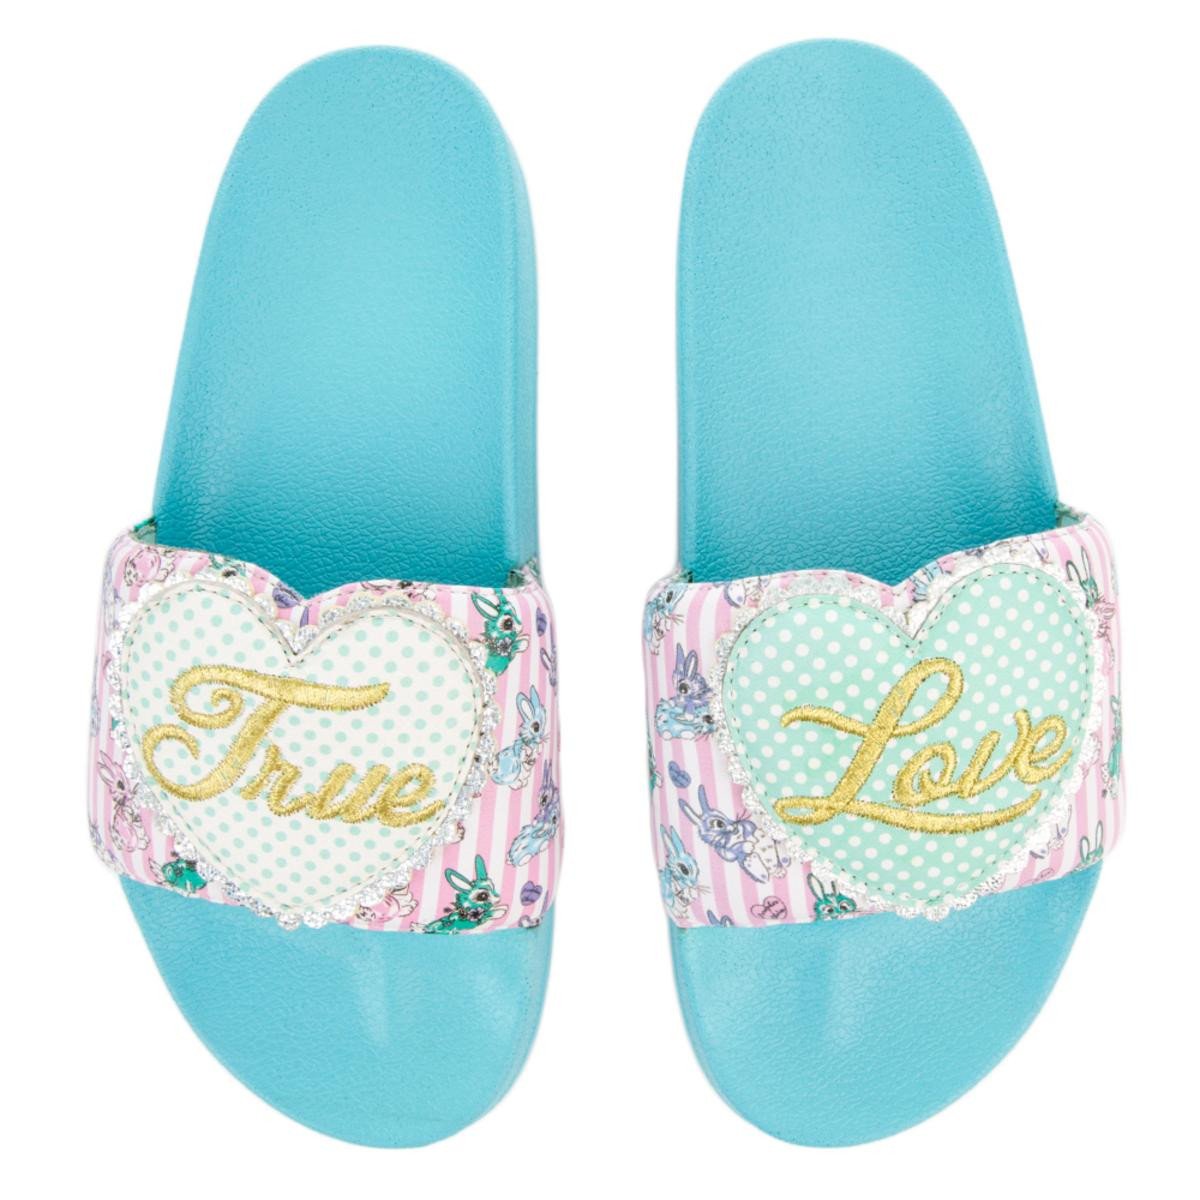 My True Love Blue Slip-On Sandal PINK/BLUE